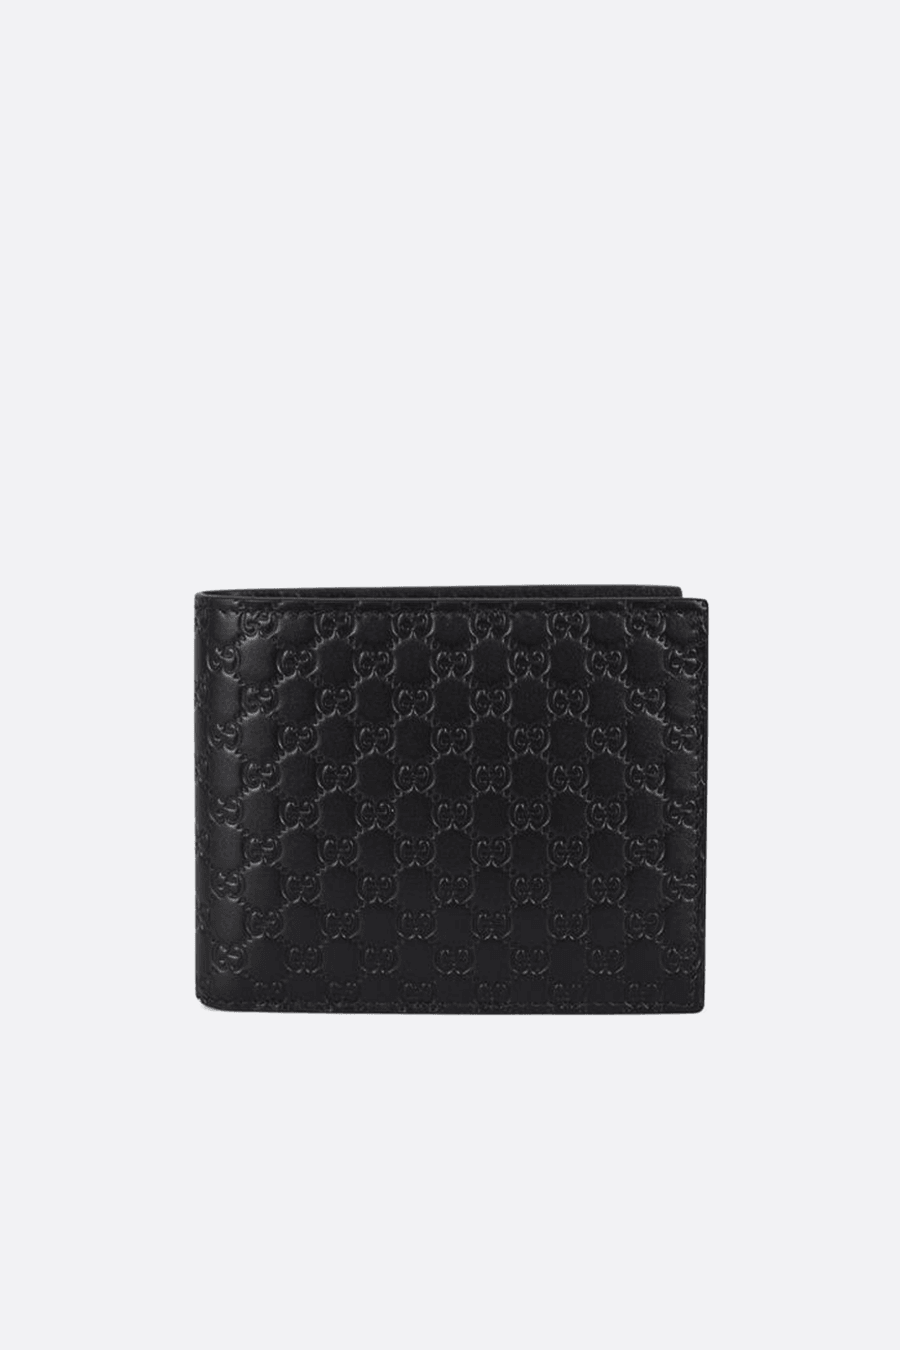 GUCCI Men's Black Microguccissima GG Logo Leather Bifold Wallet